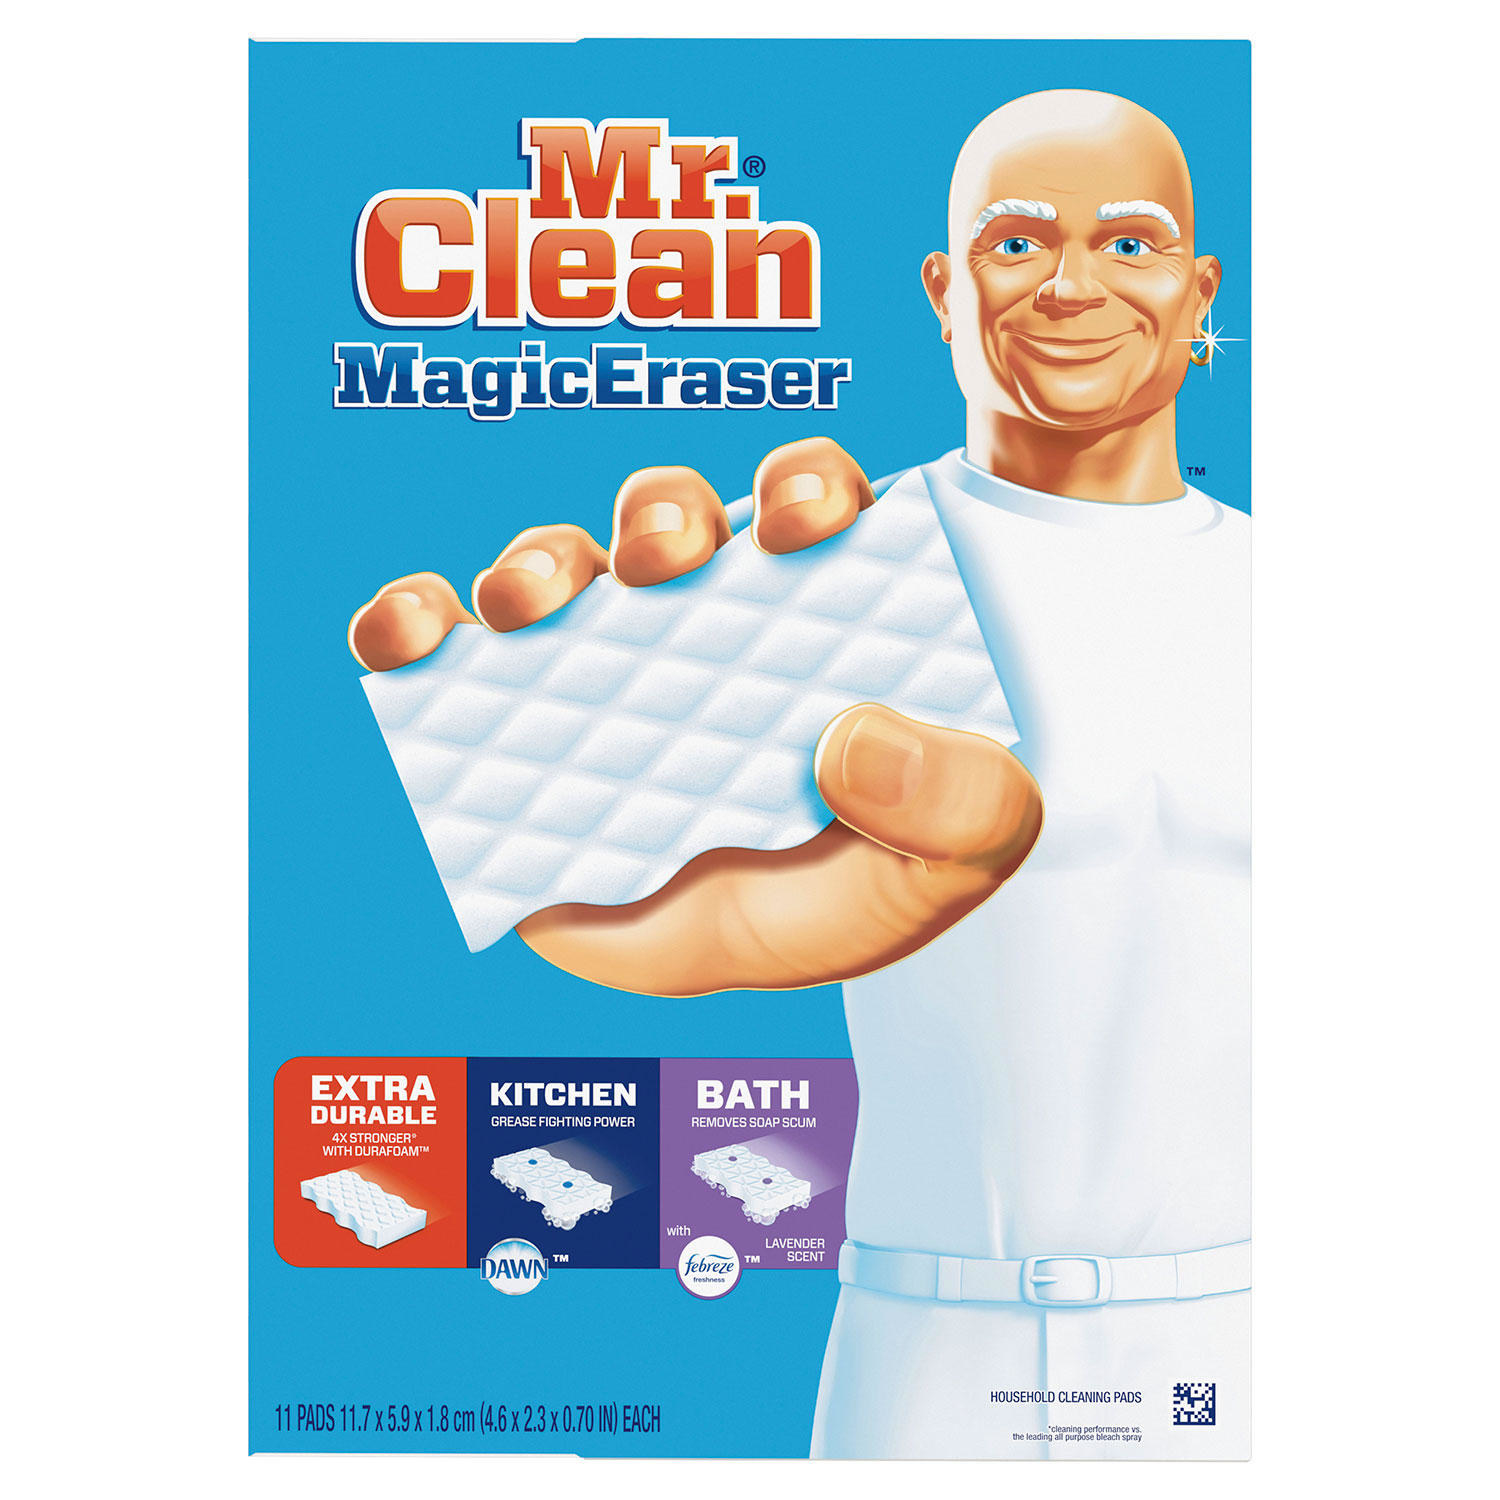 Packaging of Mr. Clean Magic Eraser